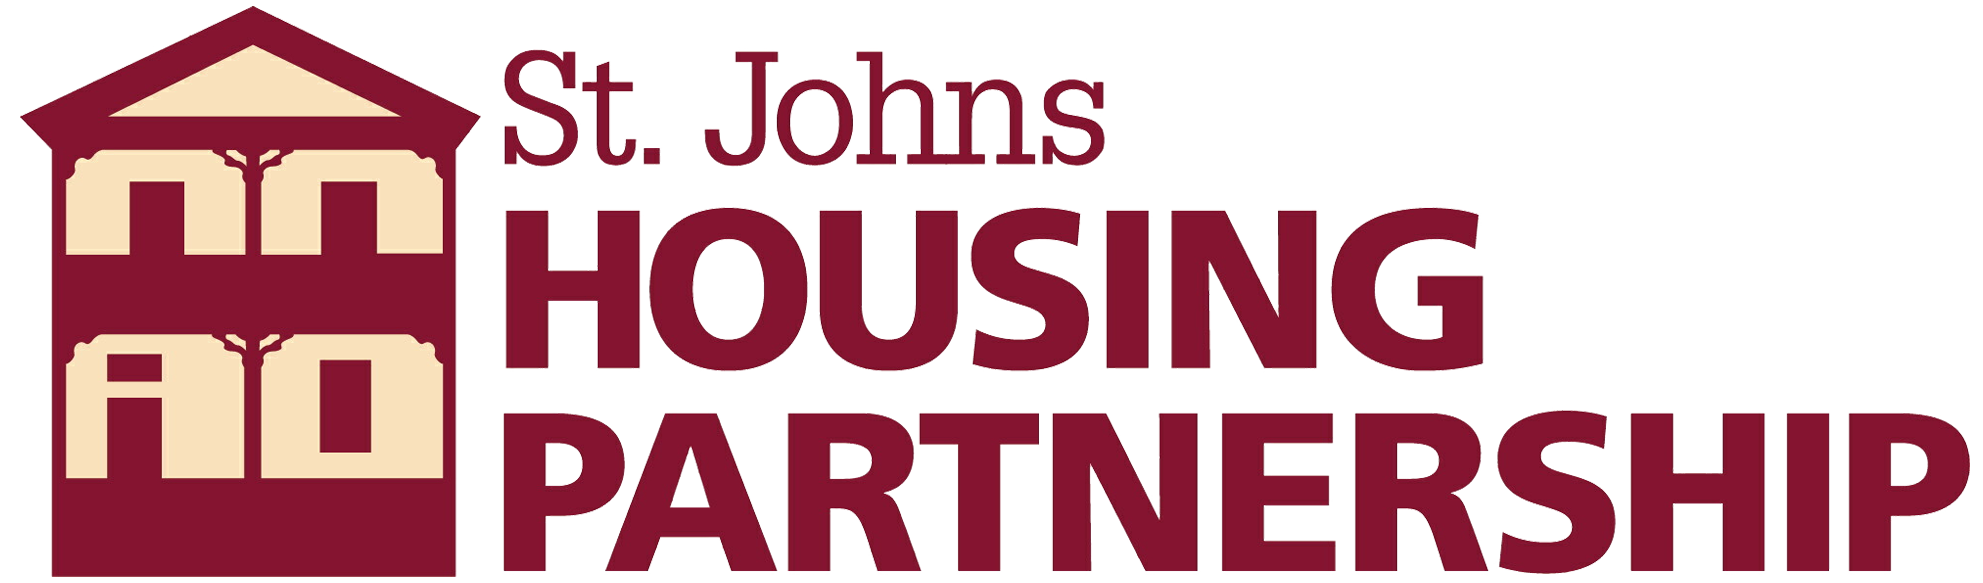 St Johns Housing Partnership